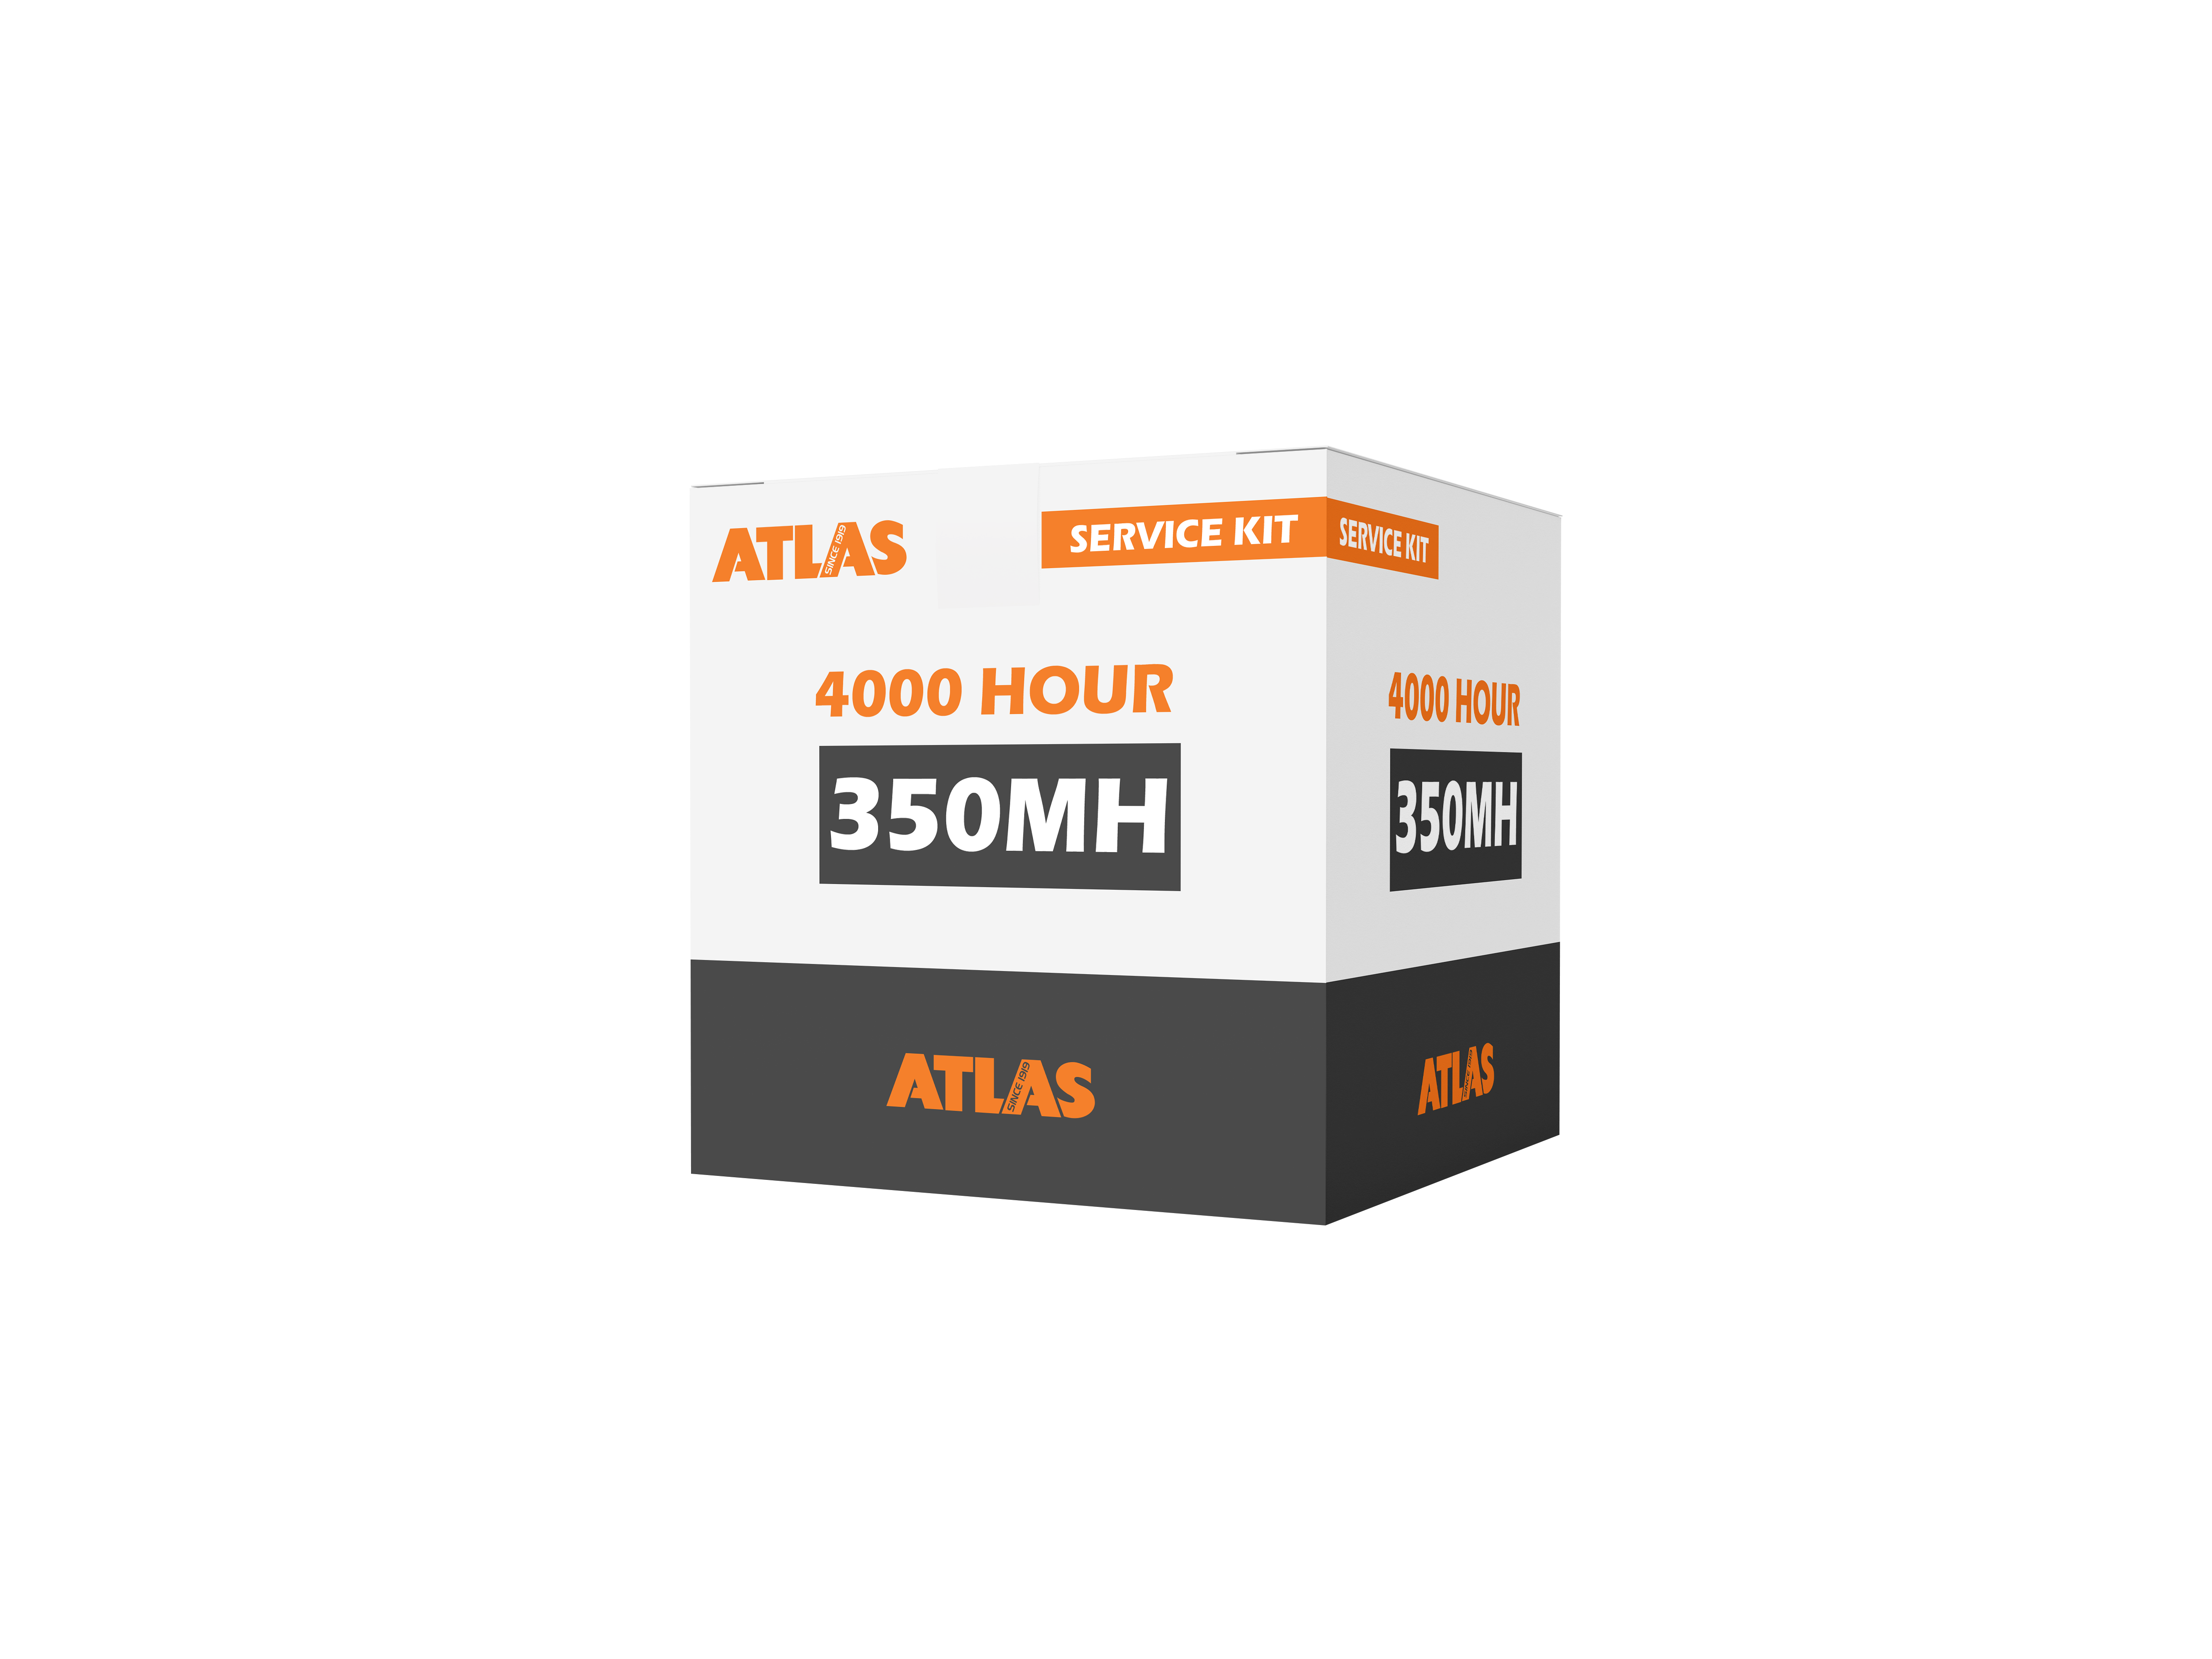 Atlas 350MH 4000 Hour Service Kit (352 series)